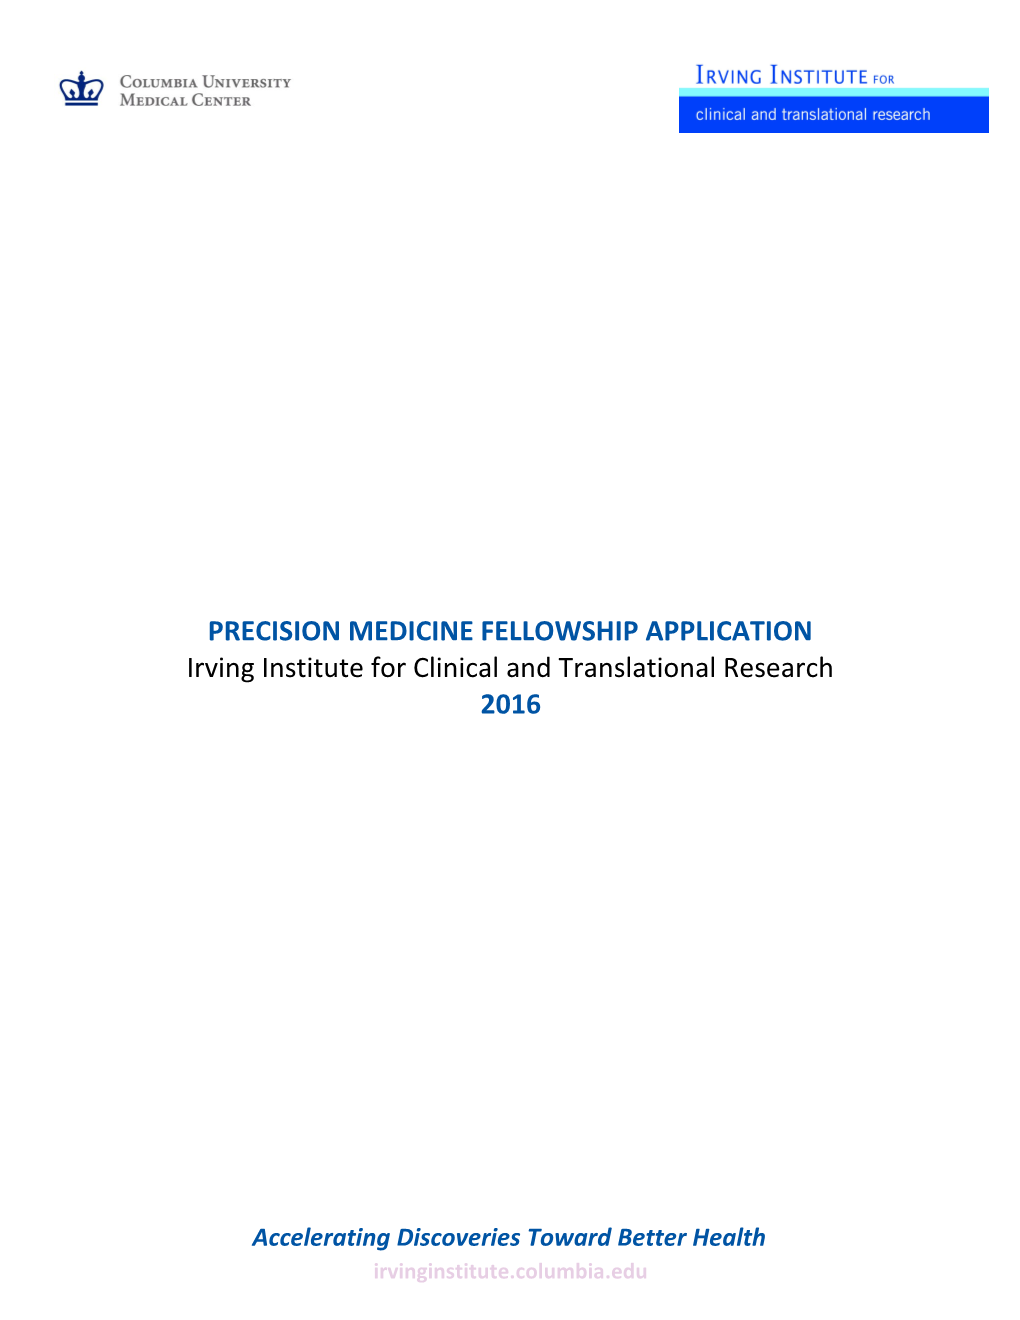 2016 Irving Institute Precision Medicine Fellowship Application